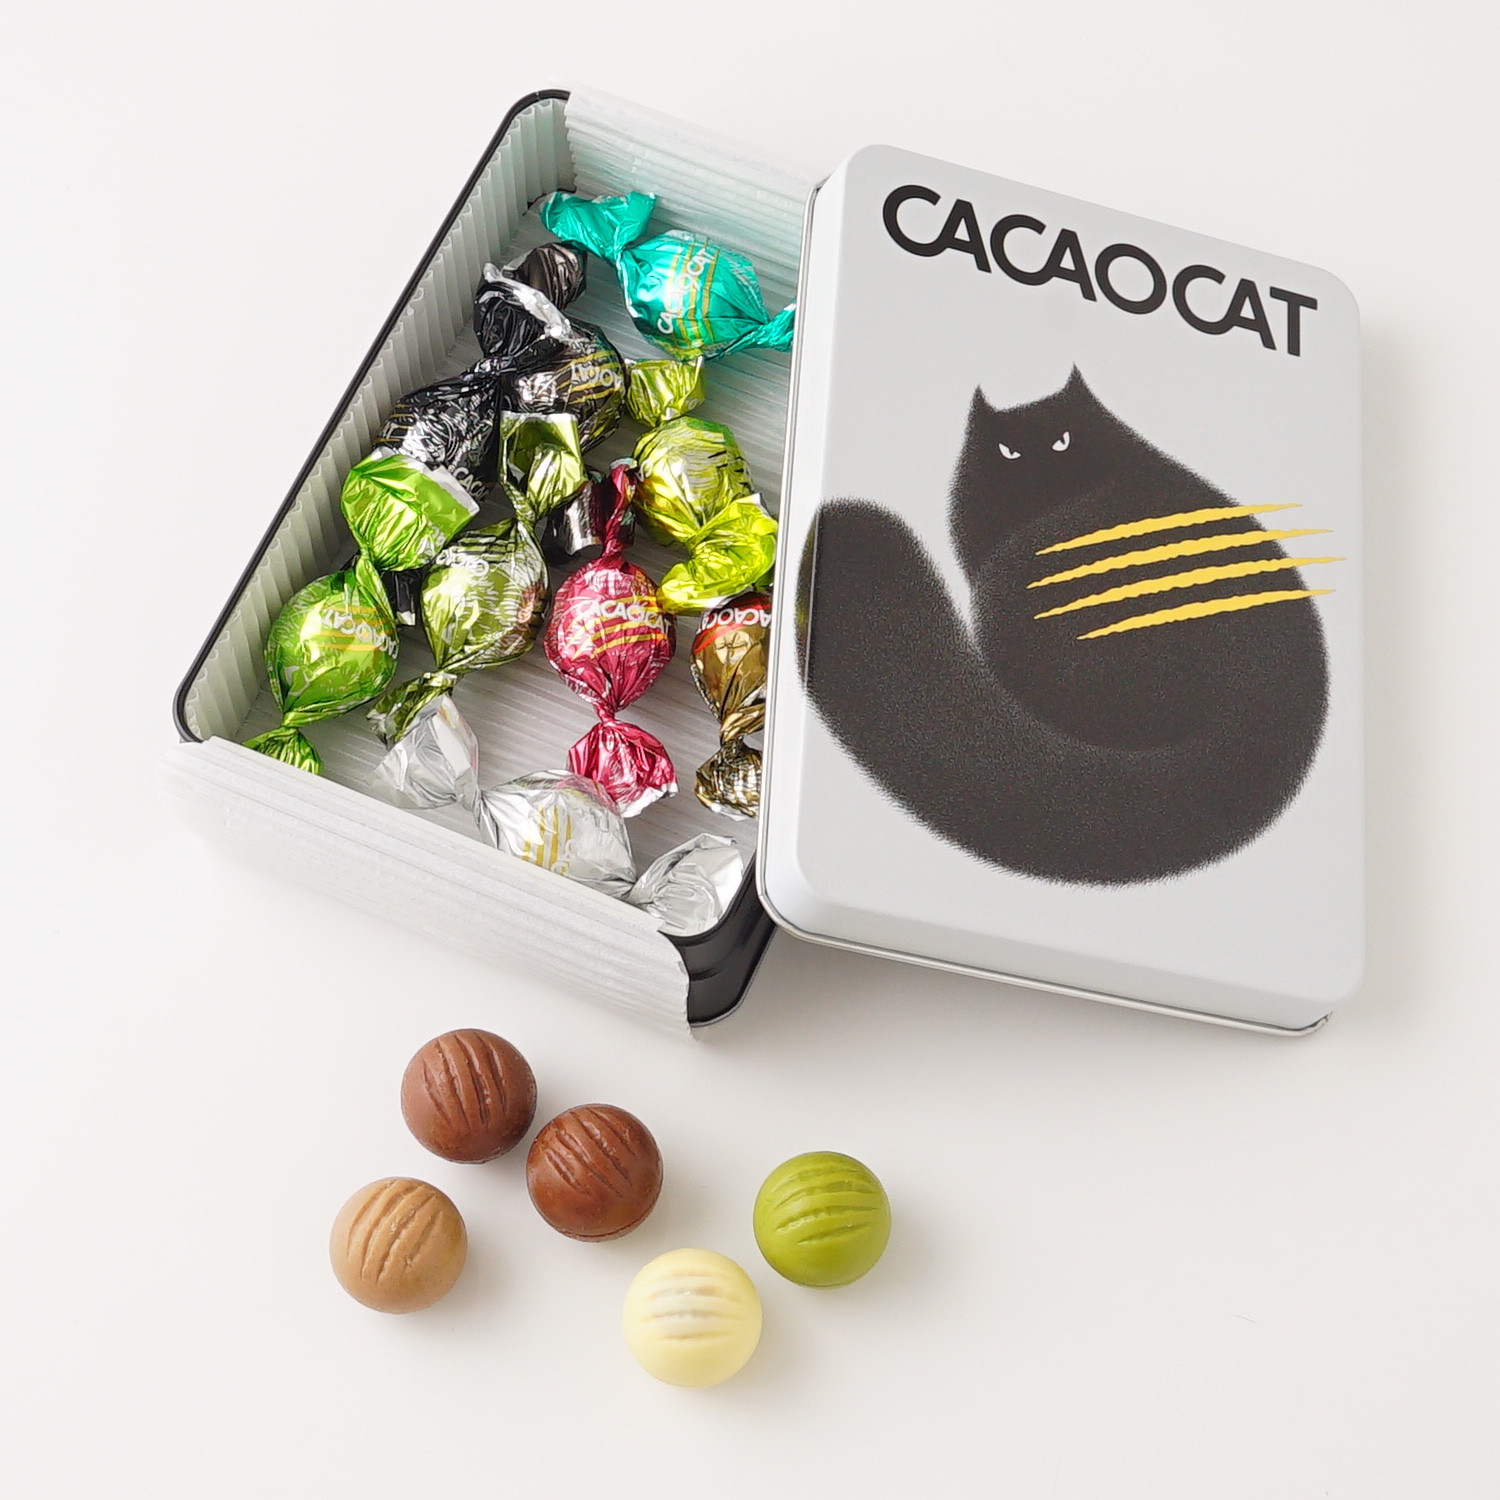 【CACAOCAT】 CACAOCAT缶 ミックス 14個入り WHITE 1